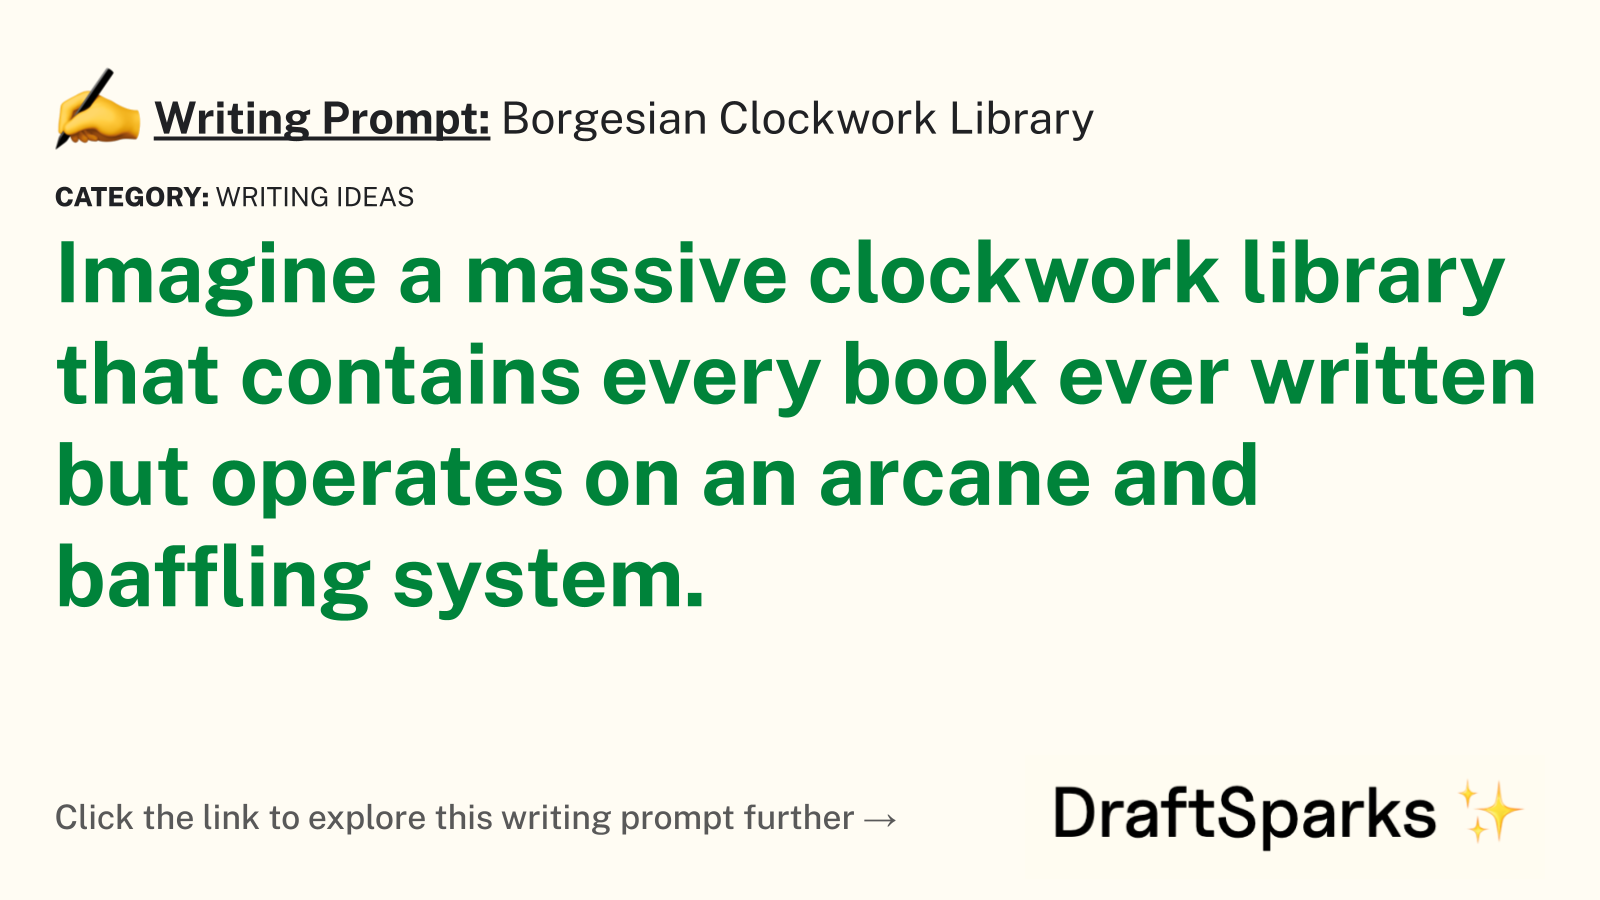 Borgesian Clockwork Library